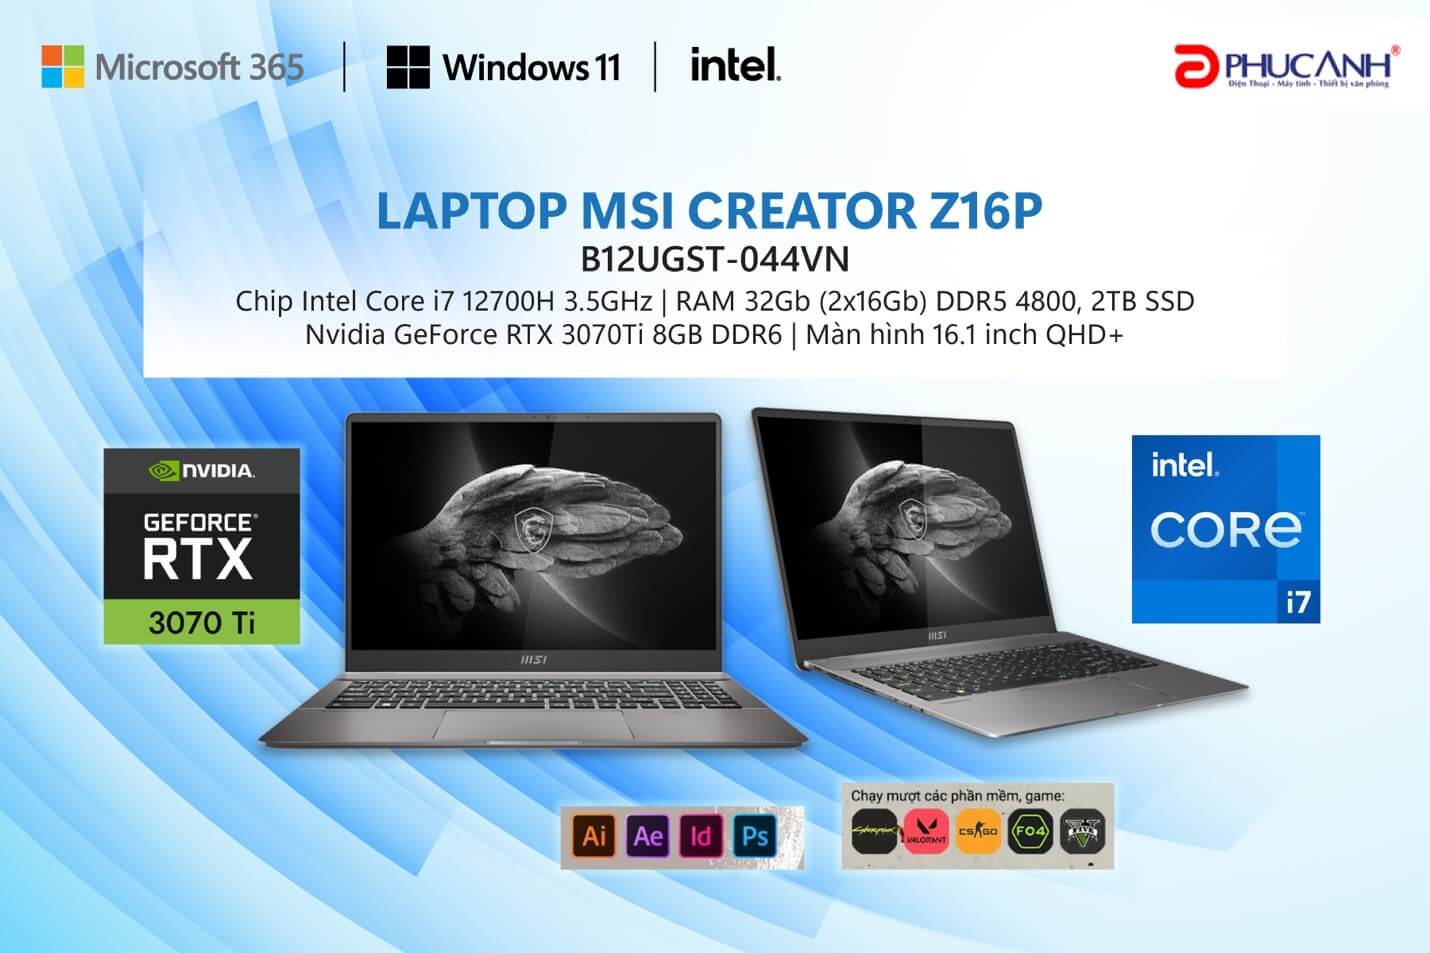 Laptop MSI CREATOR Z16P B12UGST-044VN